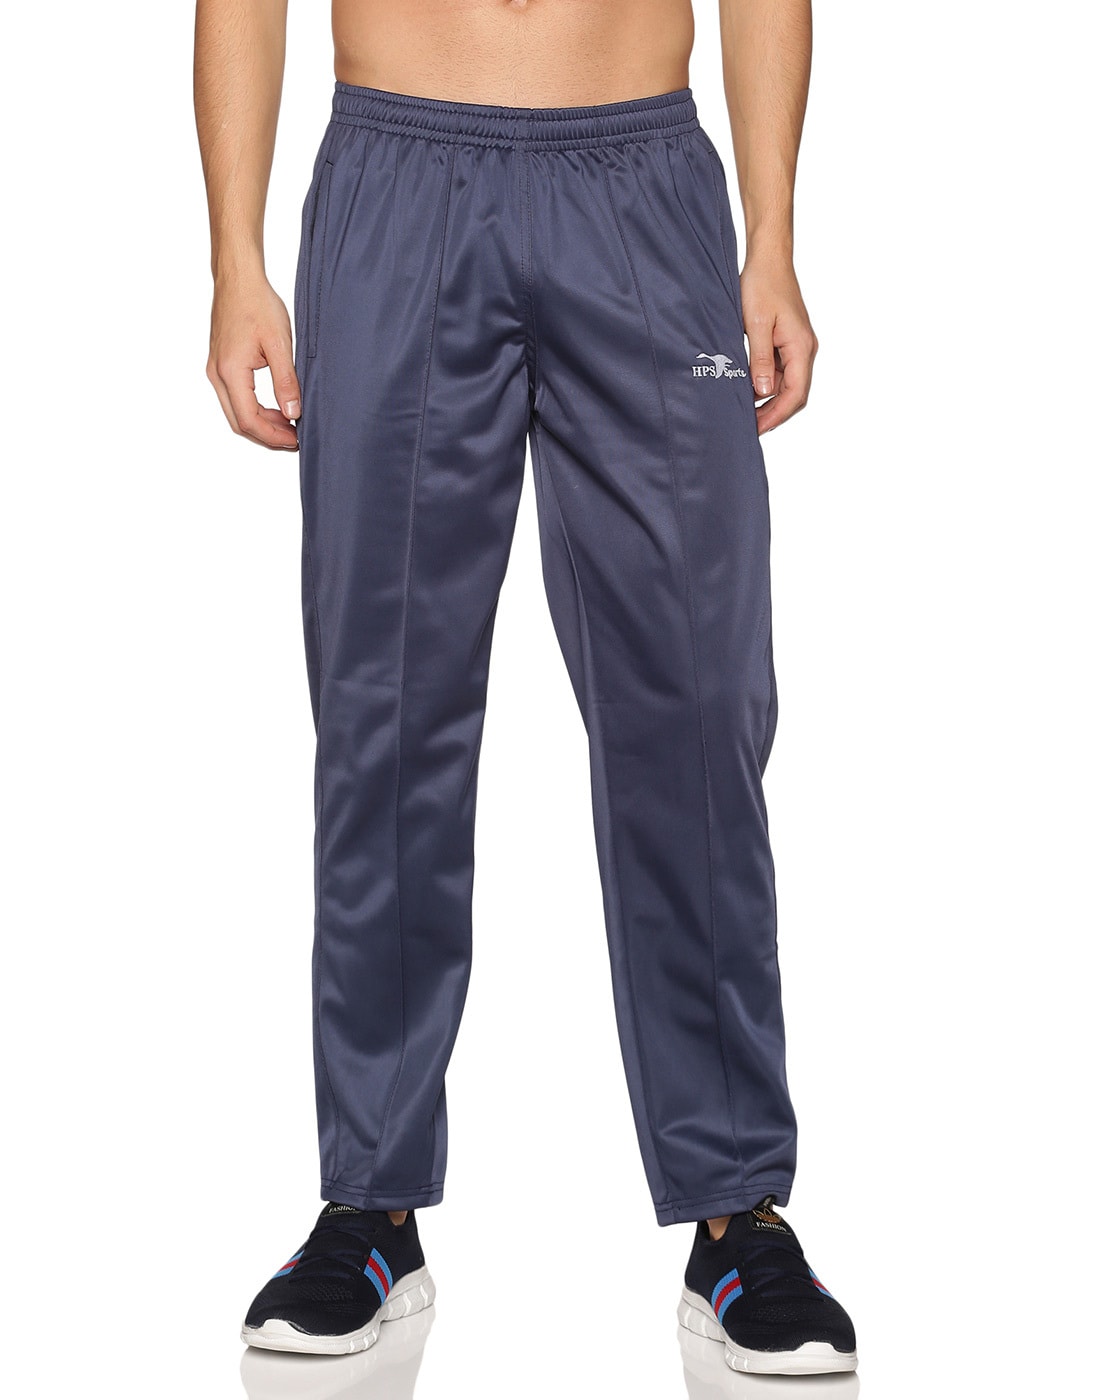 Buy Nany Blue Track Pants for Men by HPS SPORTS Online  Ajiocom